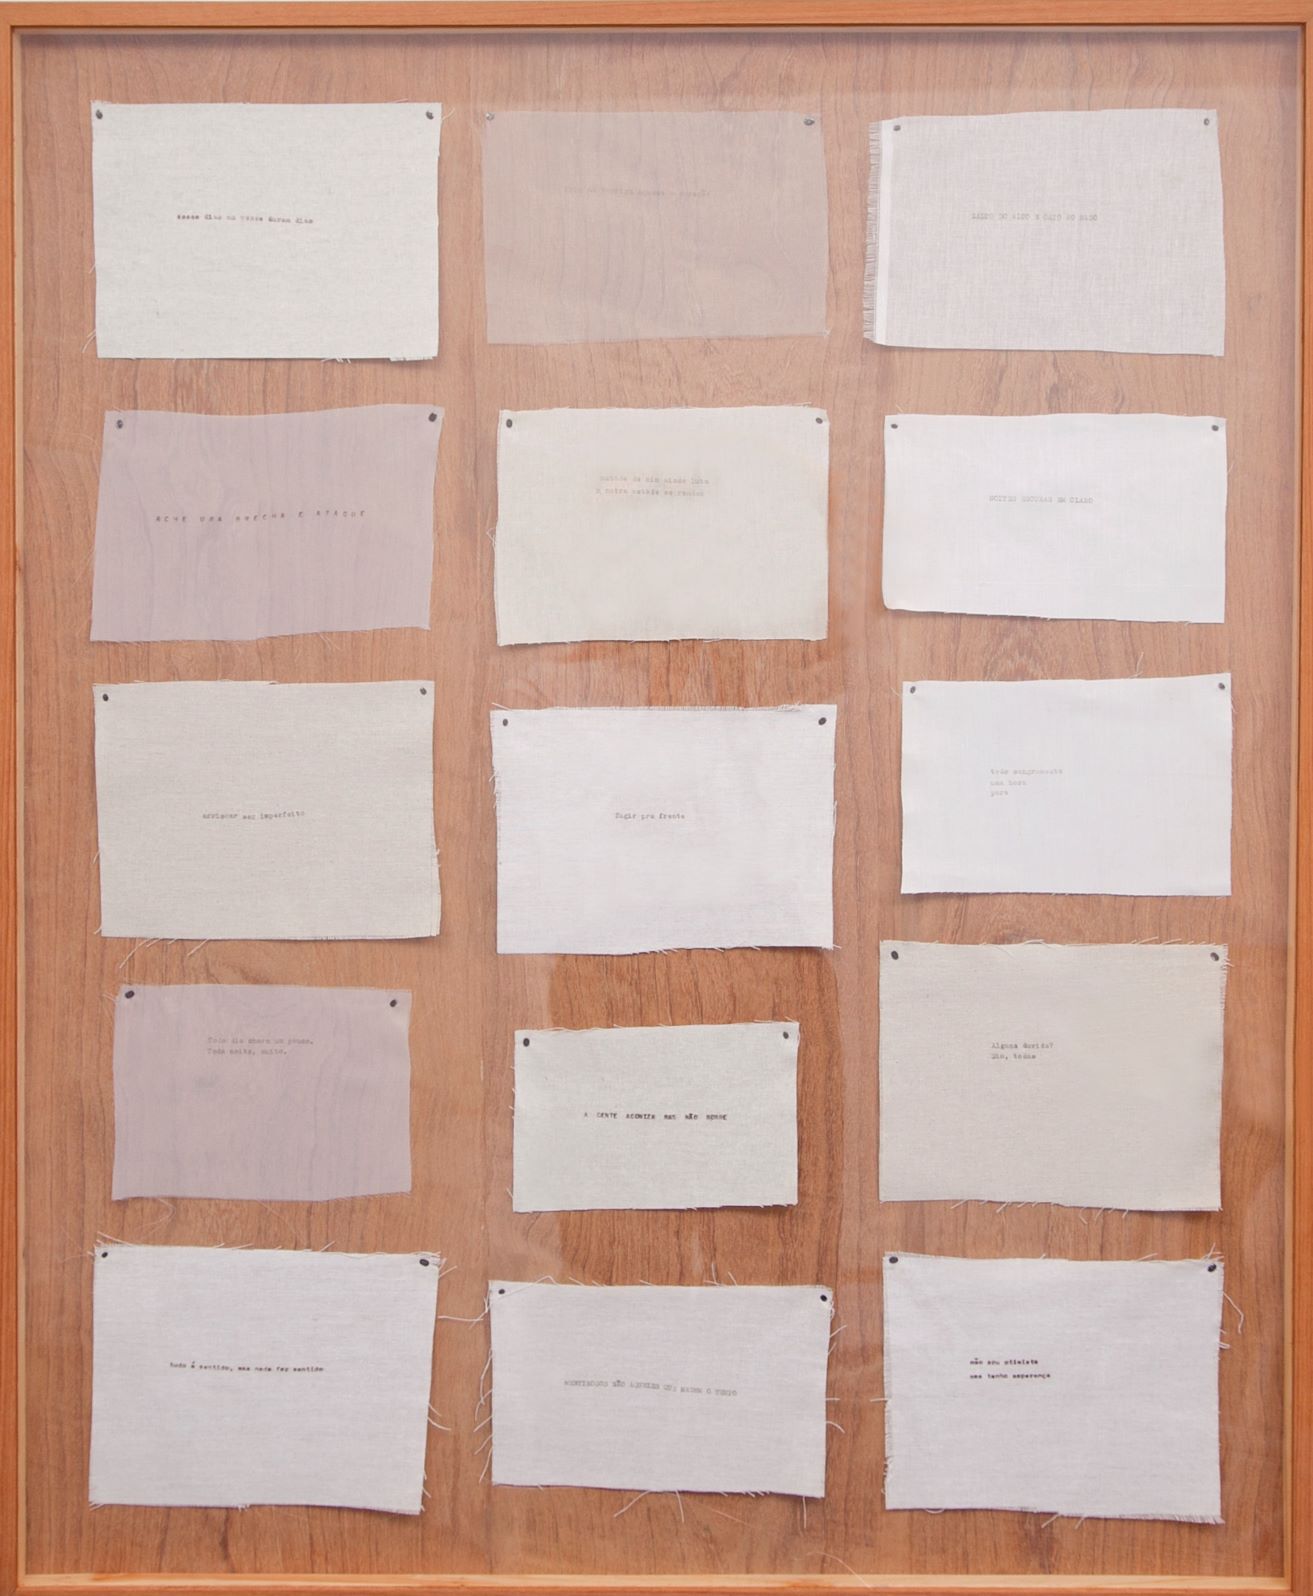 01. Verena Smit. Retalhos 1, 2022 Poliptico de 15 desenhos datilografia sobre tecido, 100x70cm Ed. 1-3. jpg